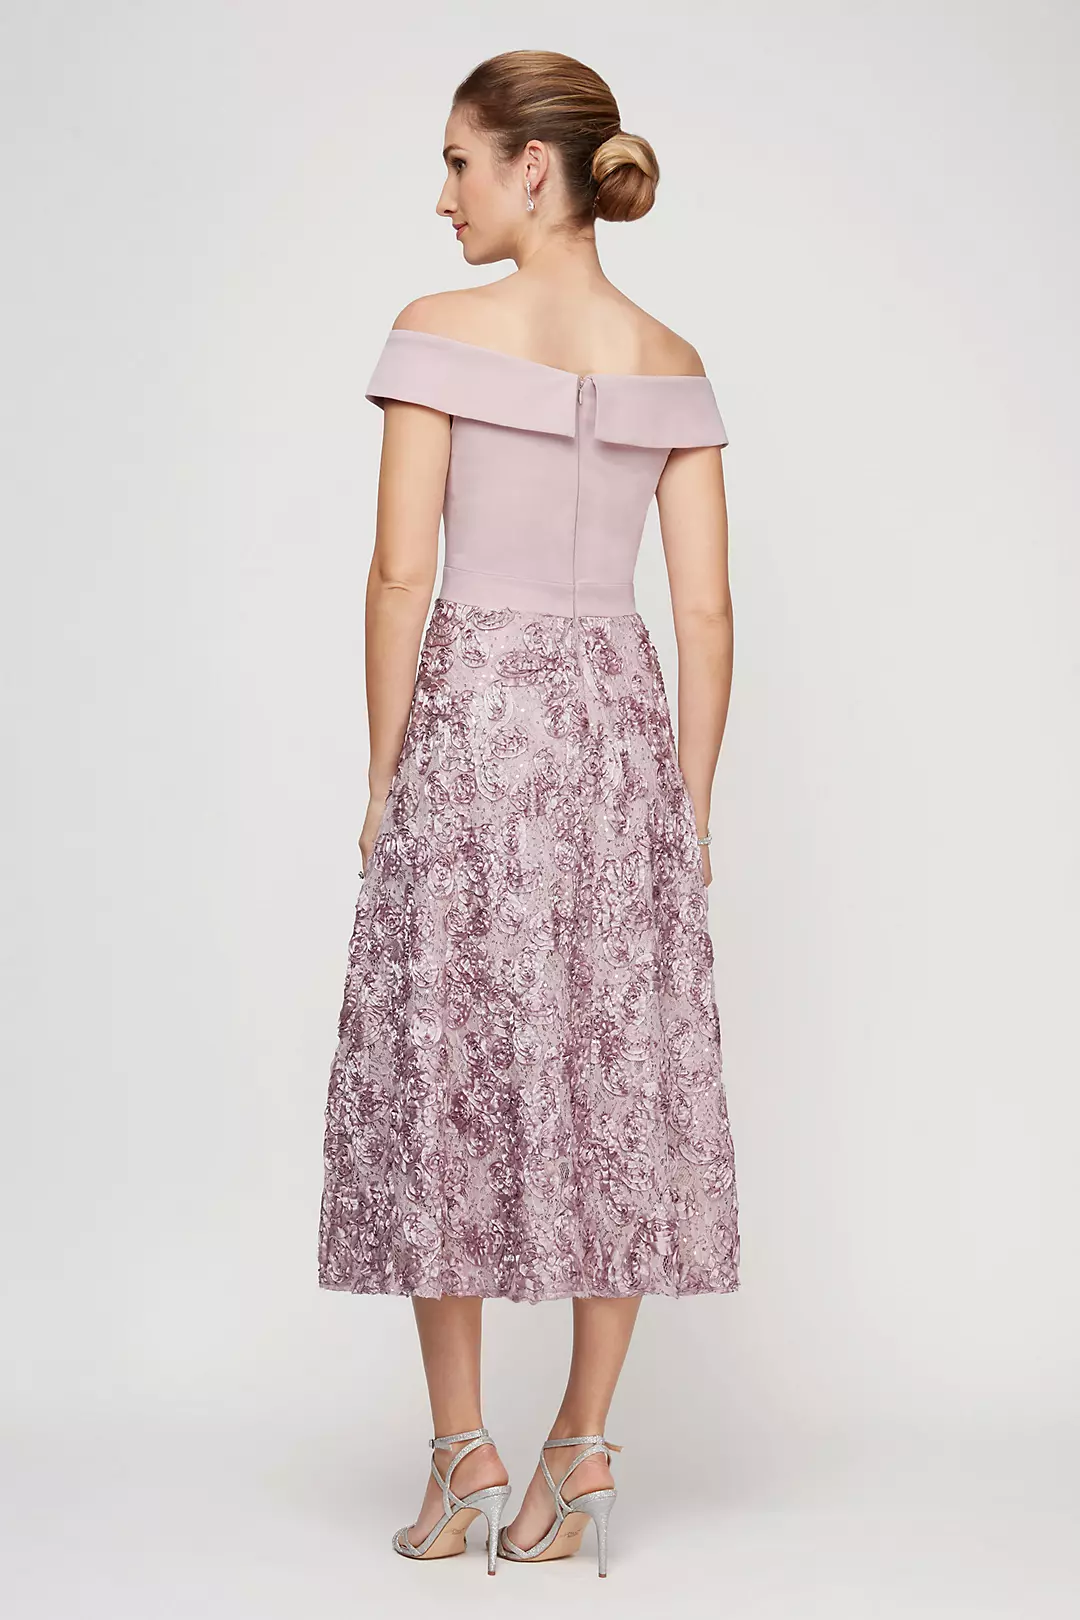 Off-the-Shoulder Surplice Dress with Rosette Skirt Image 2